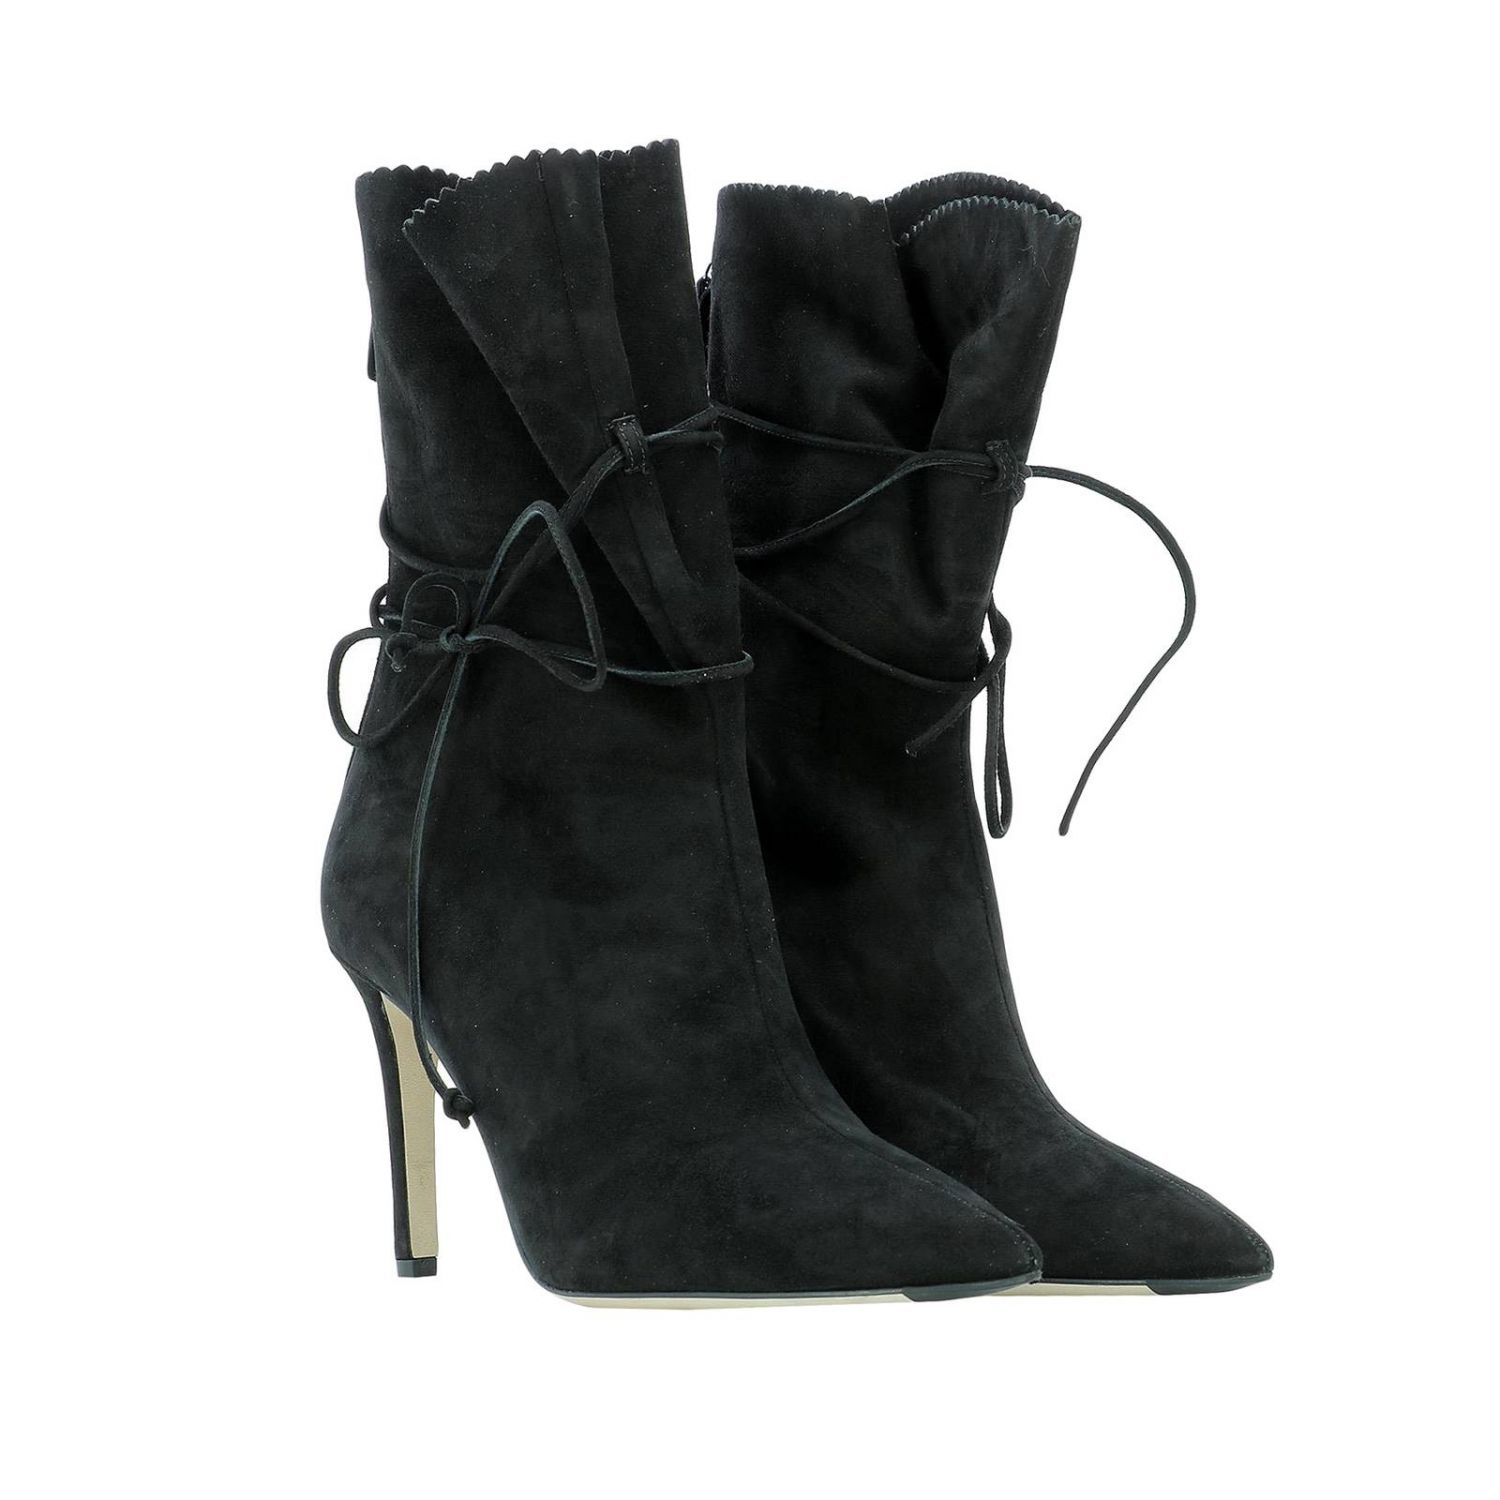 Alexander White Outlet: high heel shoes for women - Black | Alexander ...